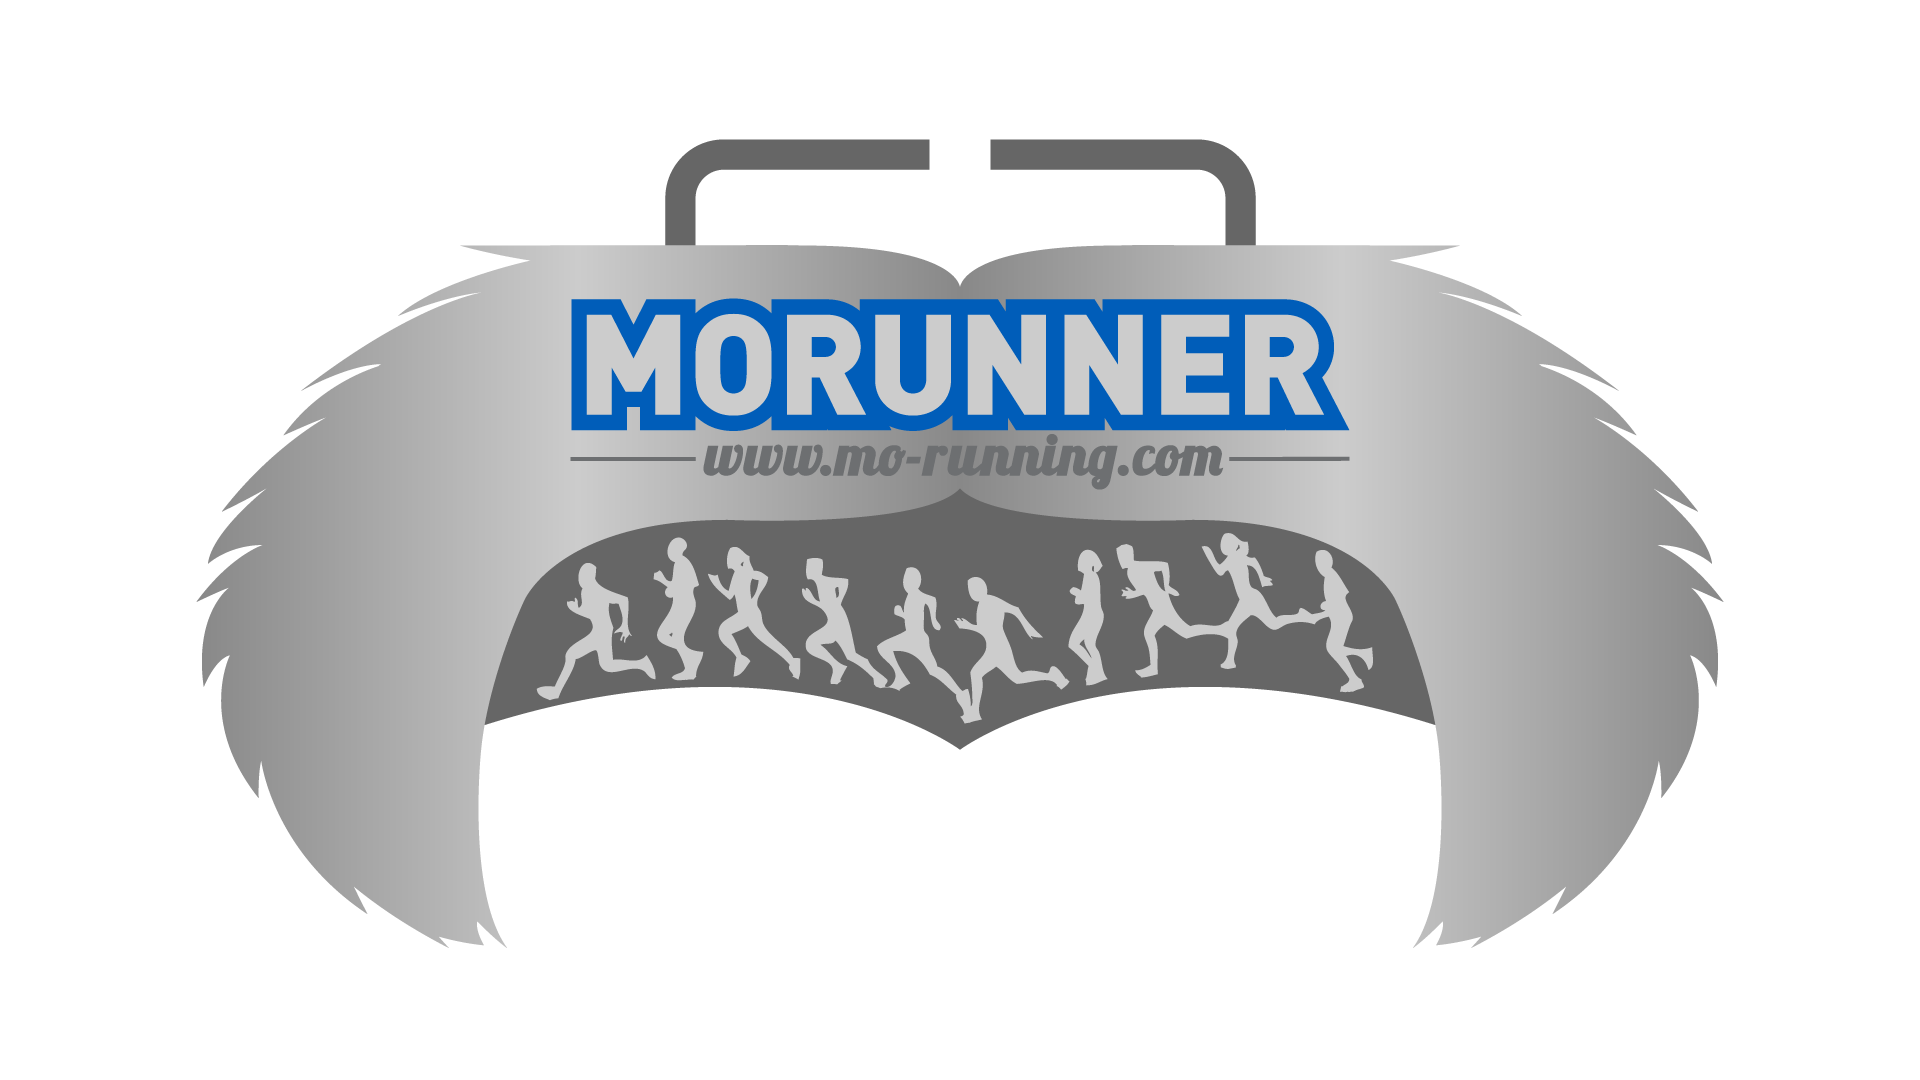 MoRunning 5k and 10k runs fundraising for the Movember Foundation